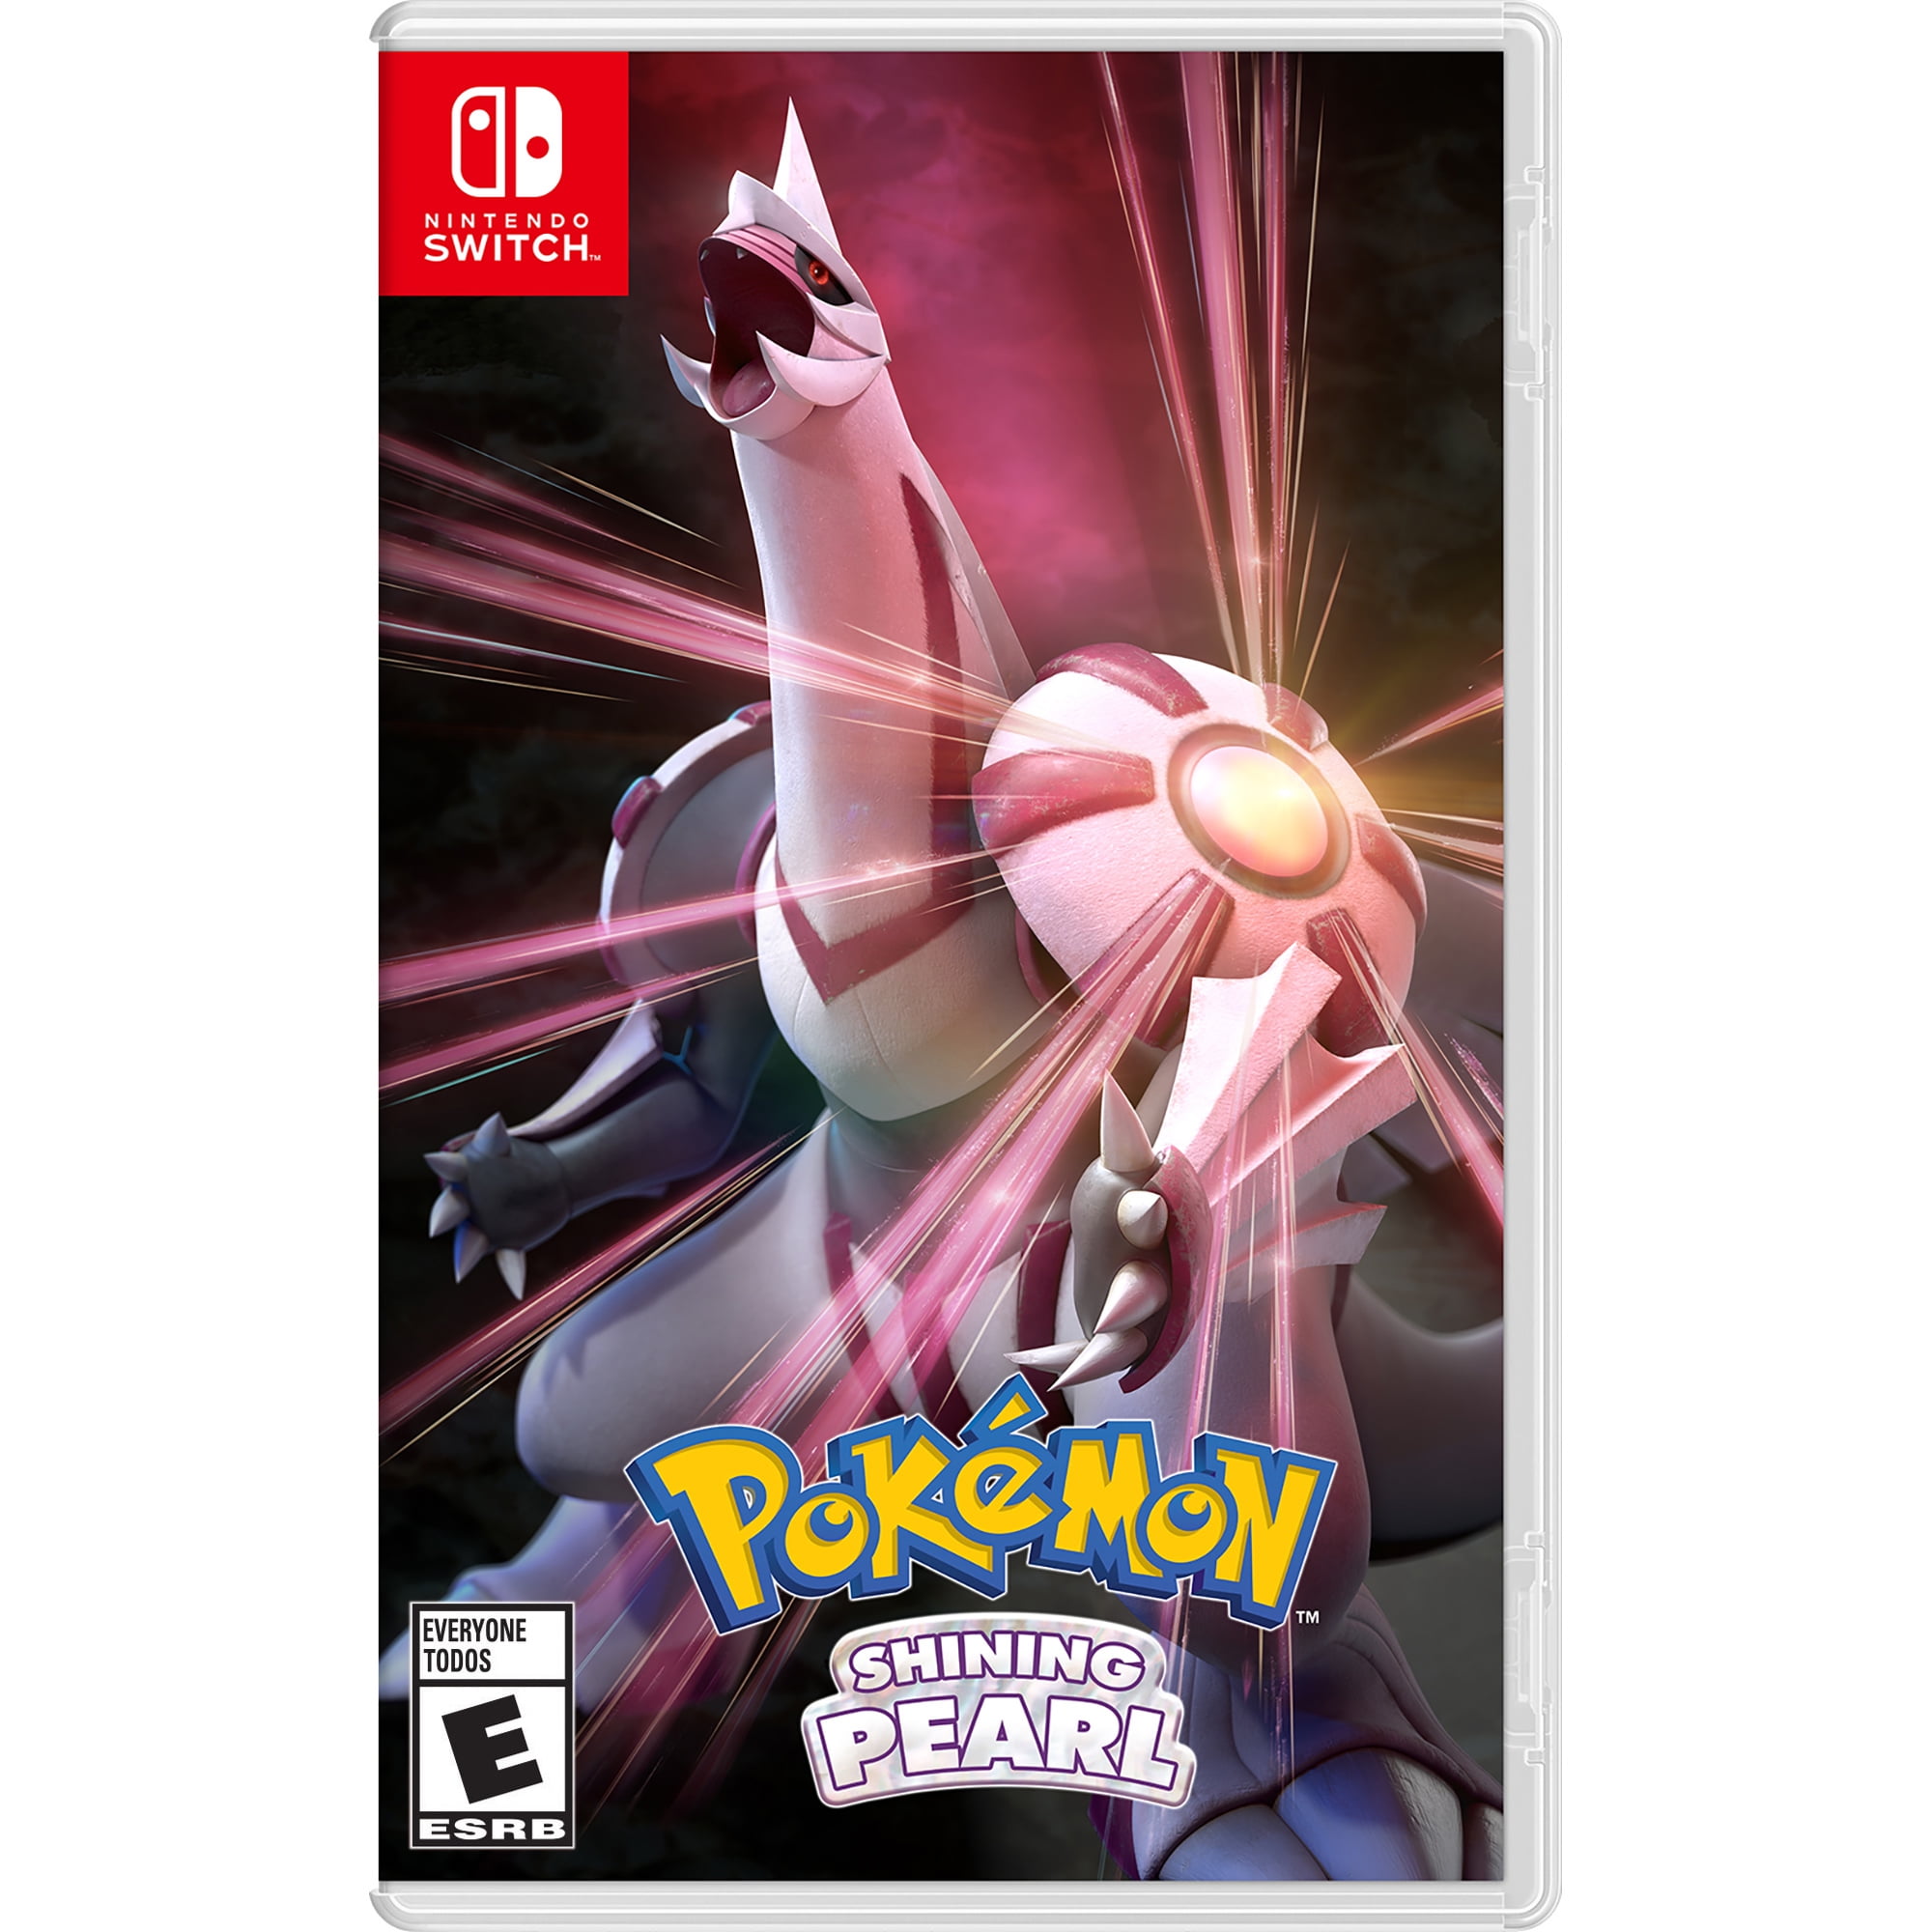 Pokemon Shining Pearl, Nintendo, Nintendo